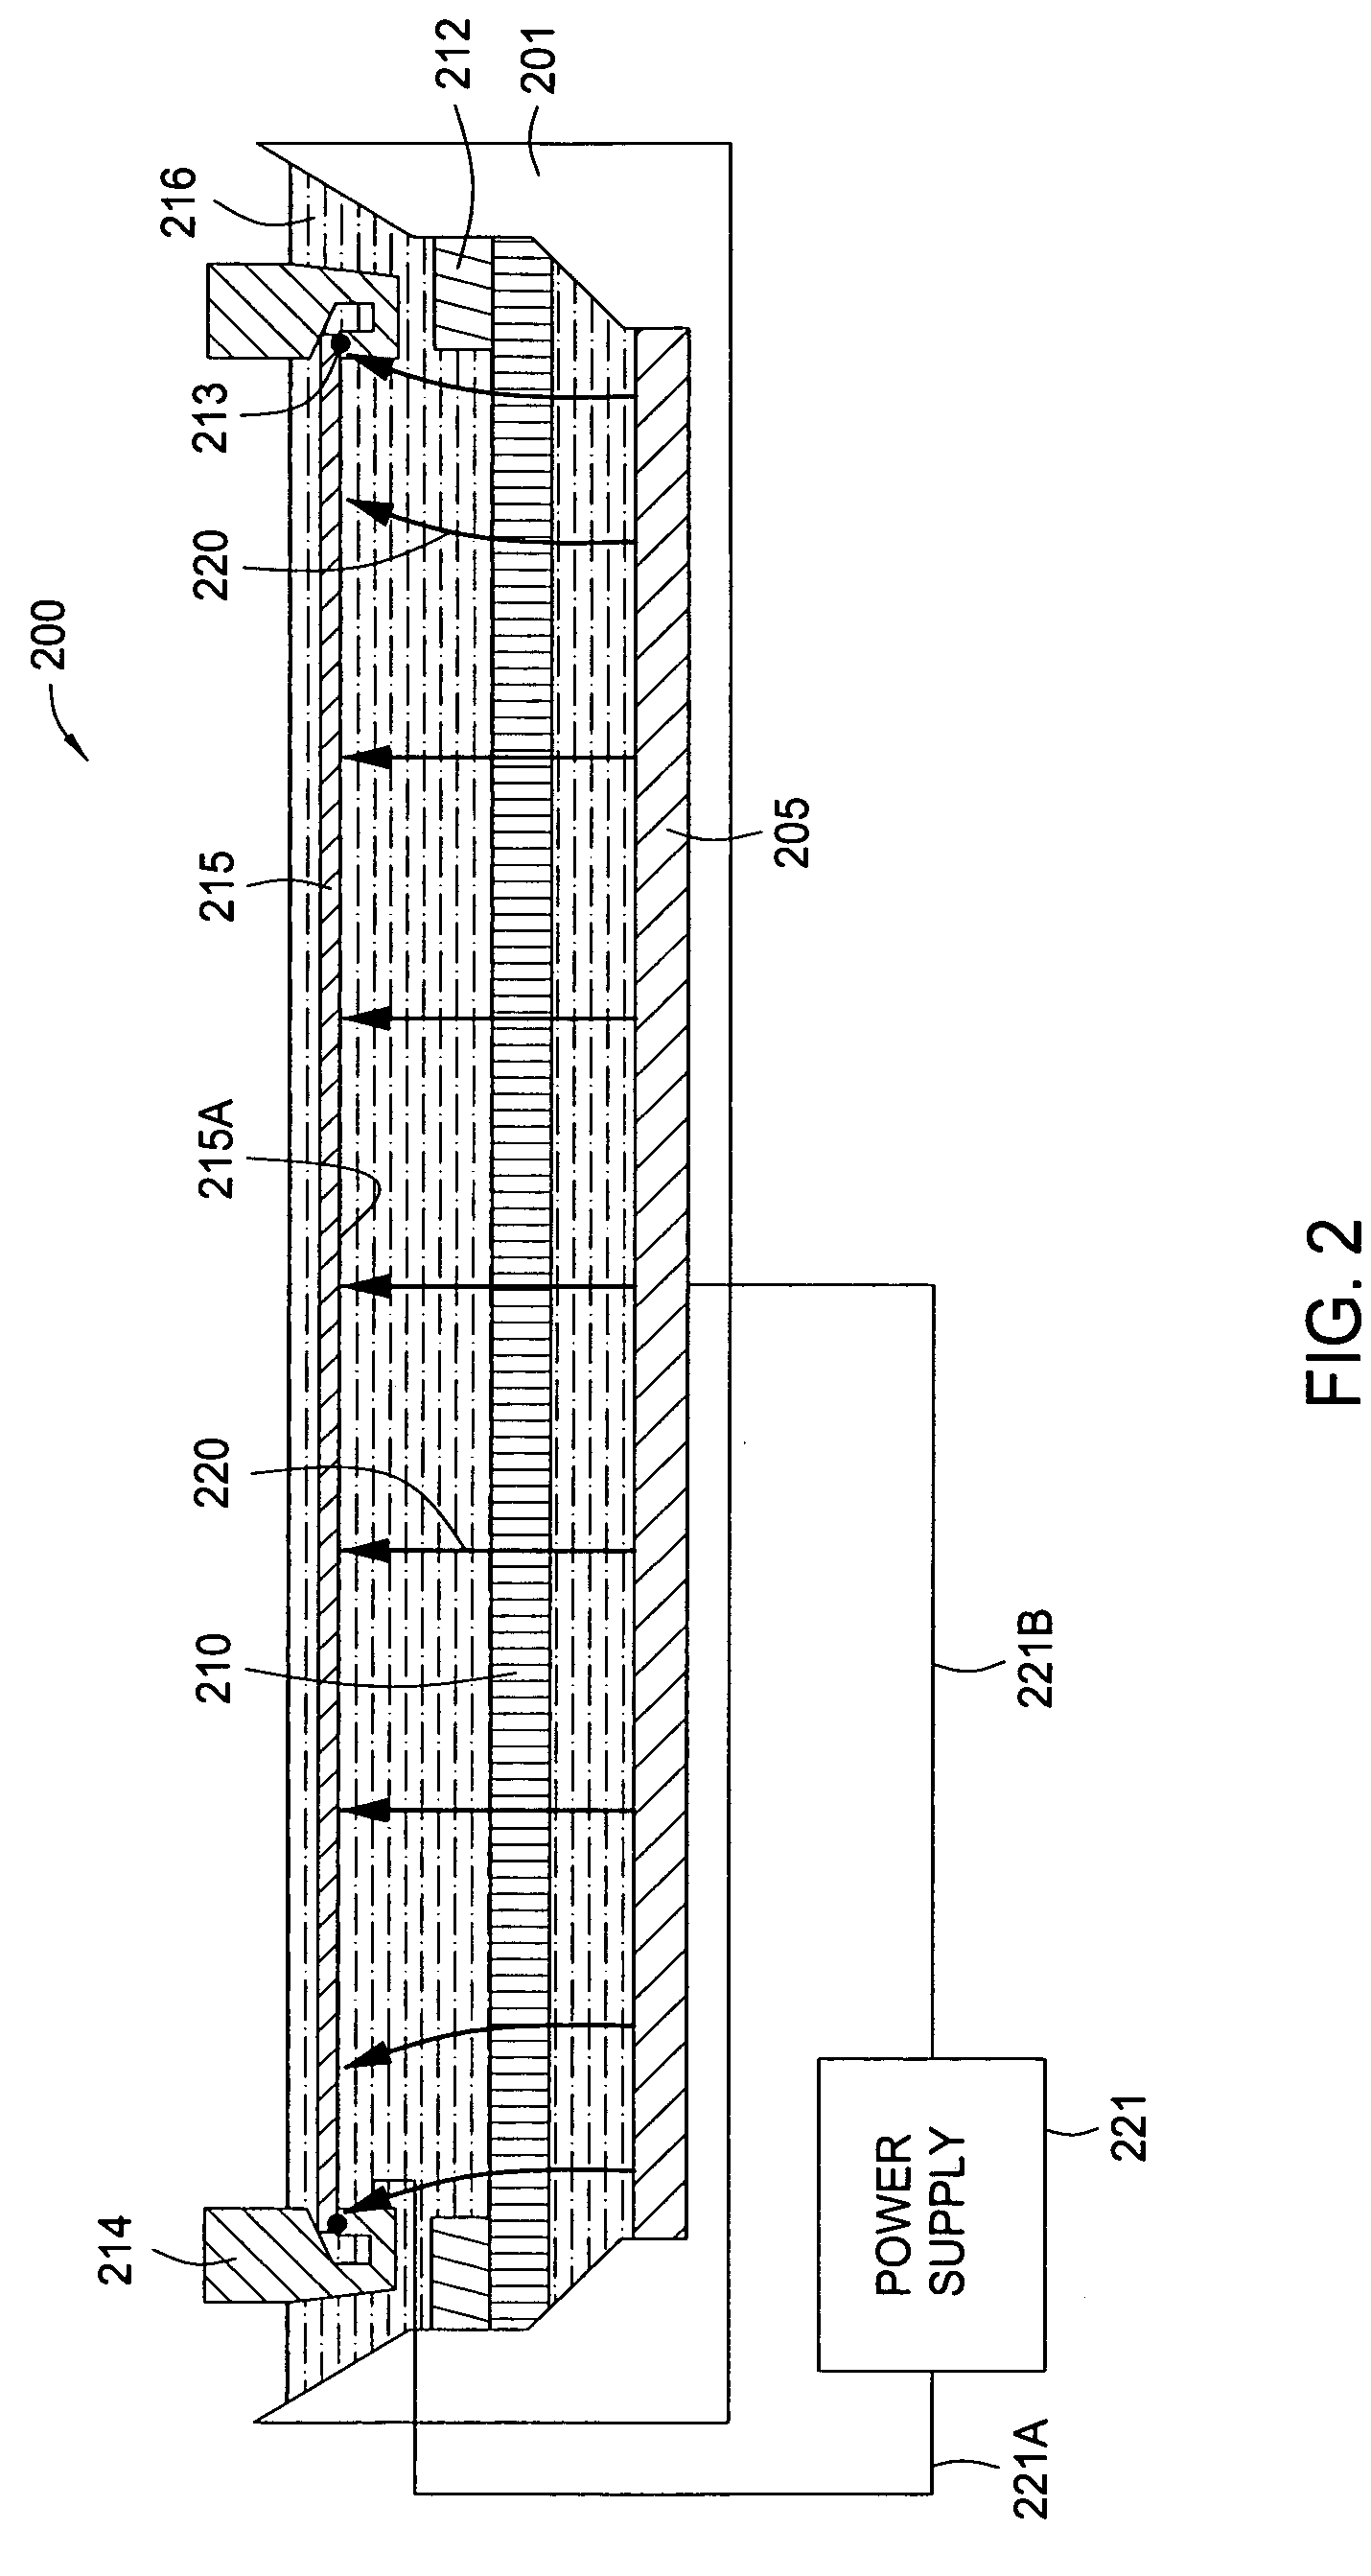 In-situ profile measurement in an electroplating process